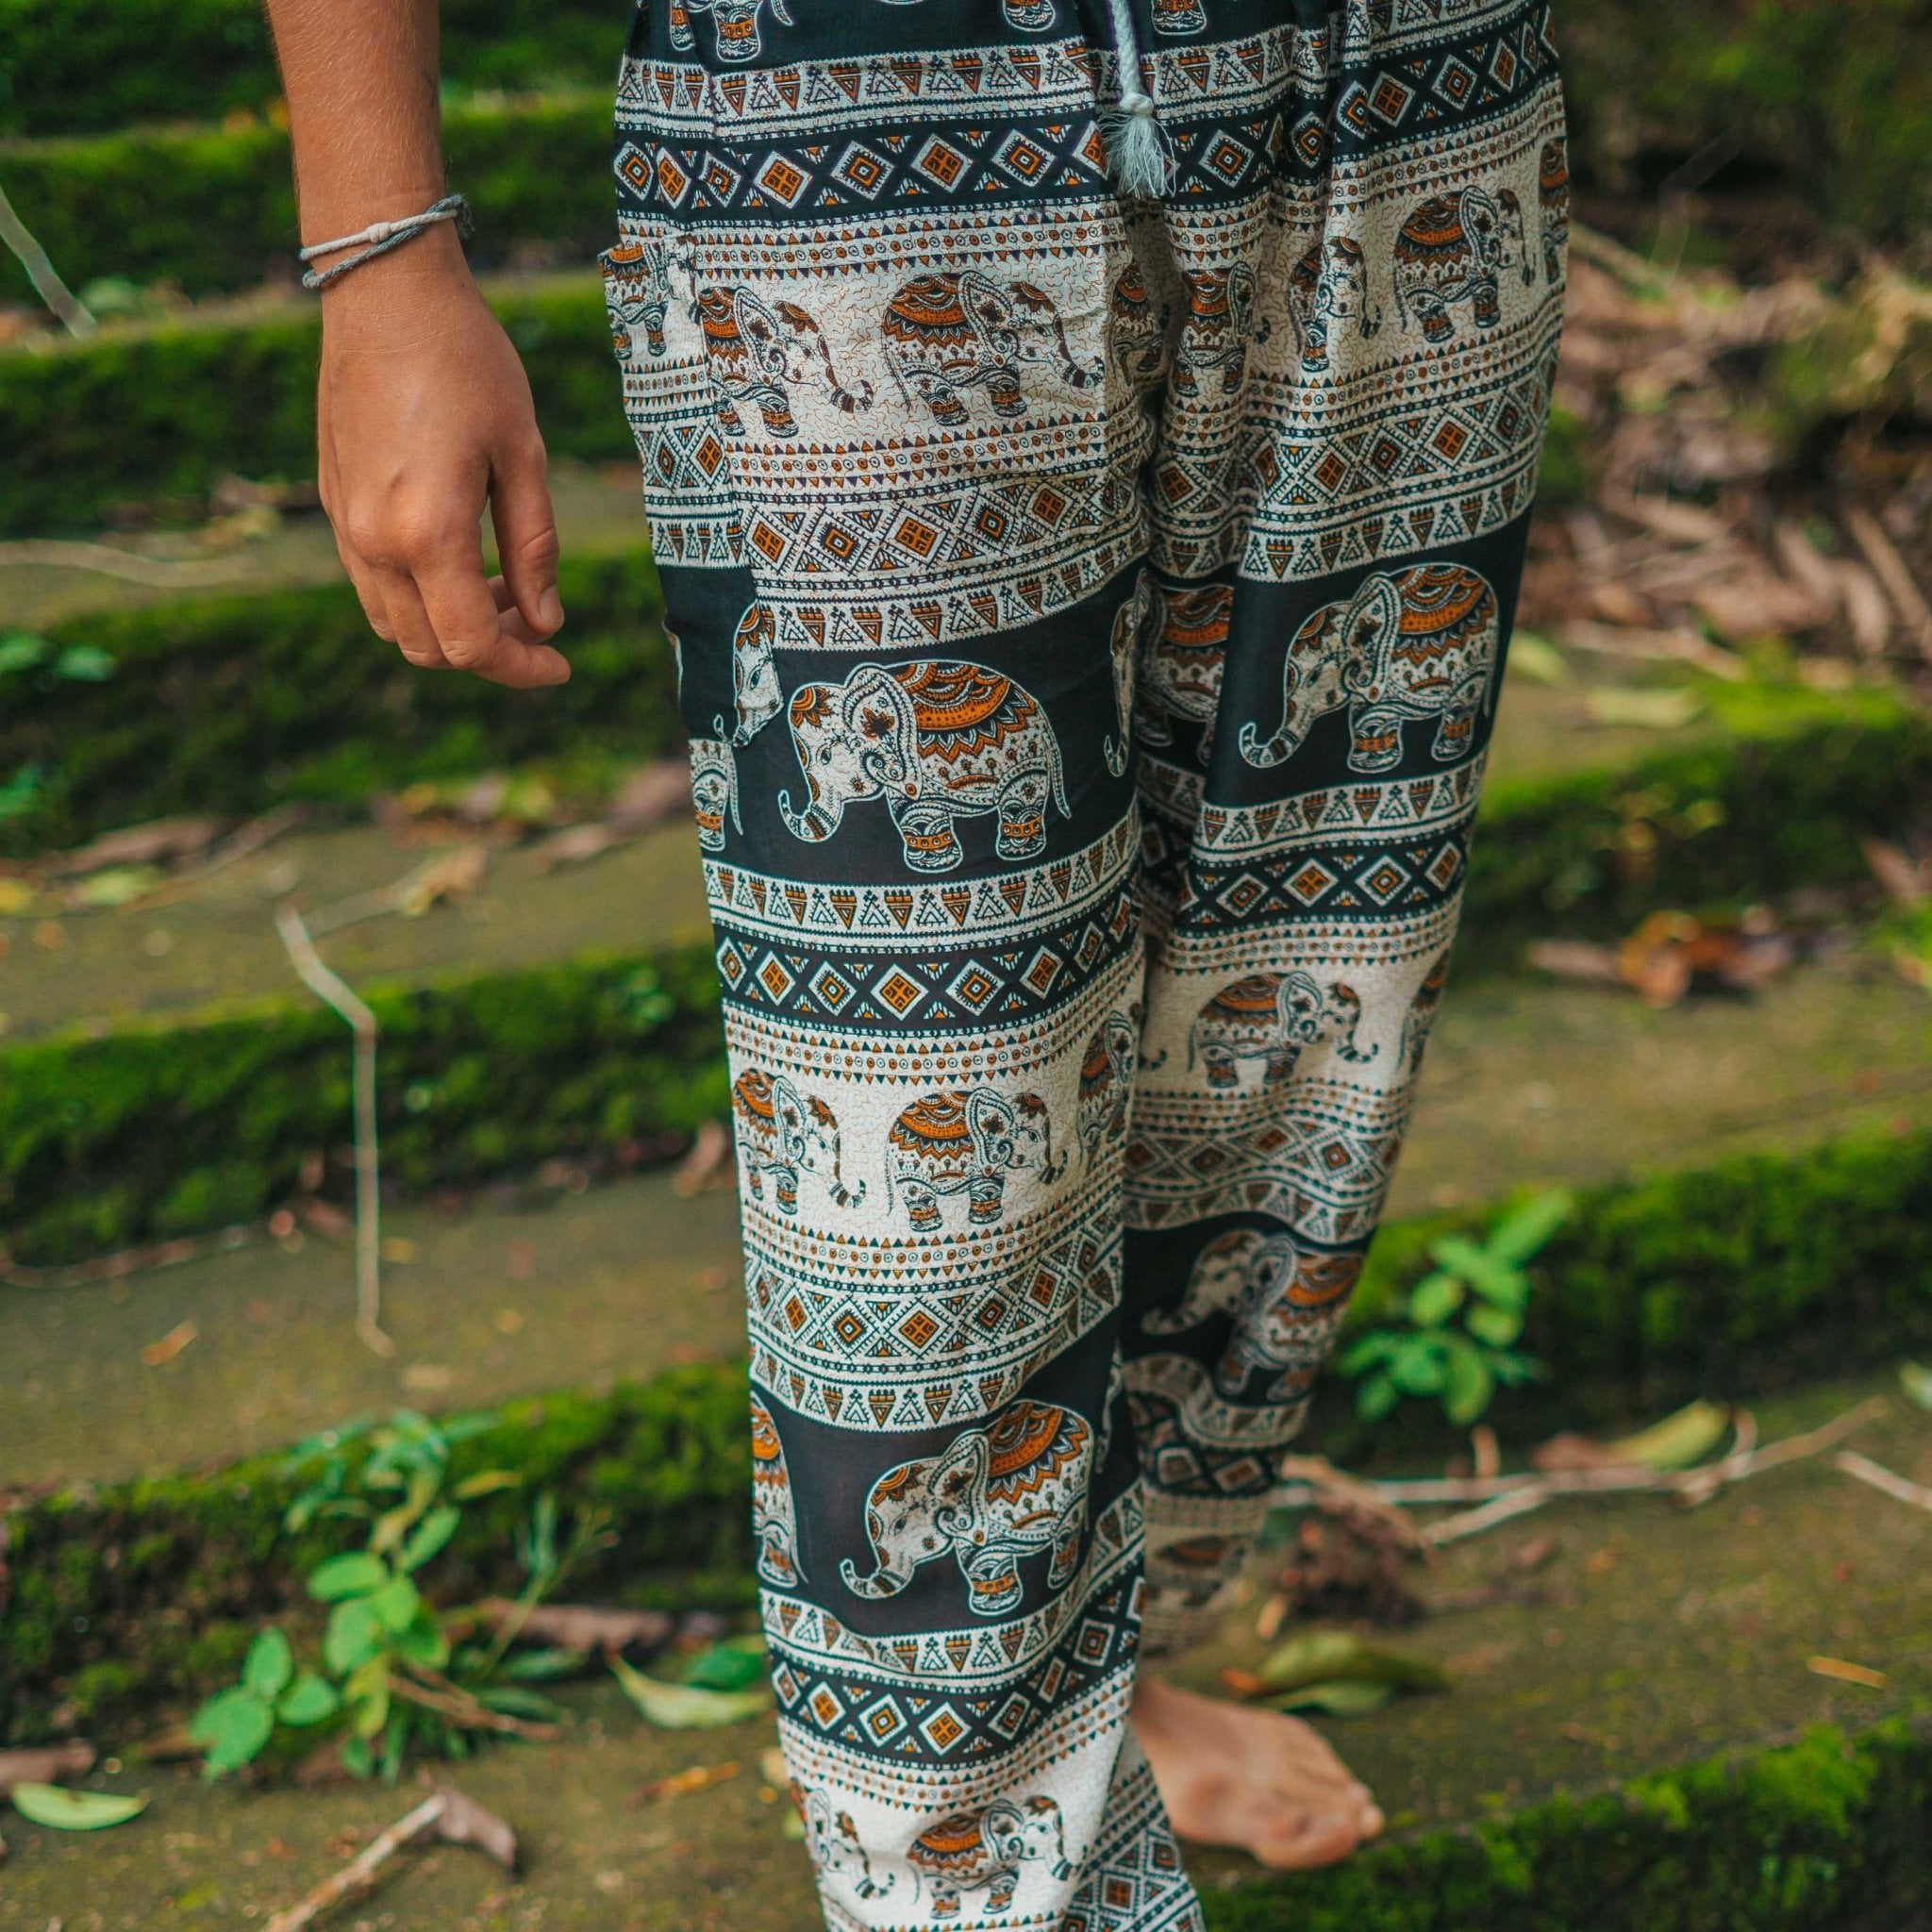 ANGKOR PANTS - Drawstring Elepanta Drawstring Pants - Buy Today Elephant Pants Jewelry And Bohemian Clothes Handmade In Thailand Help To Save The Elephants FairTrade And Vegan